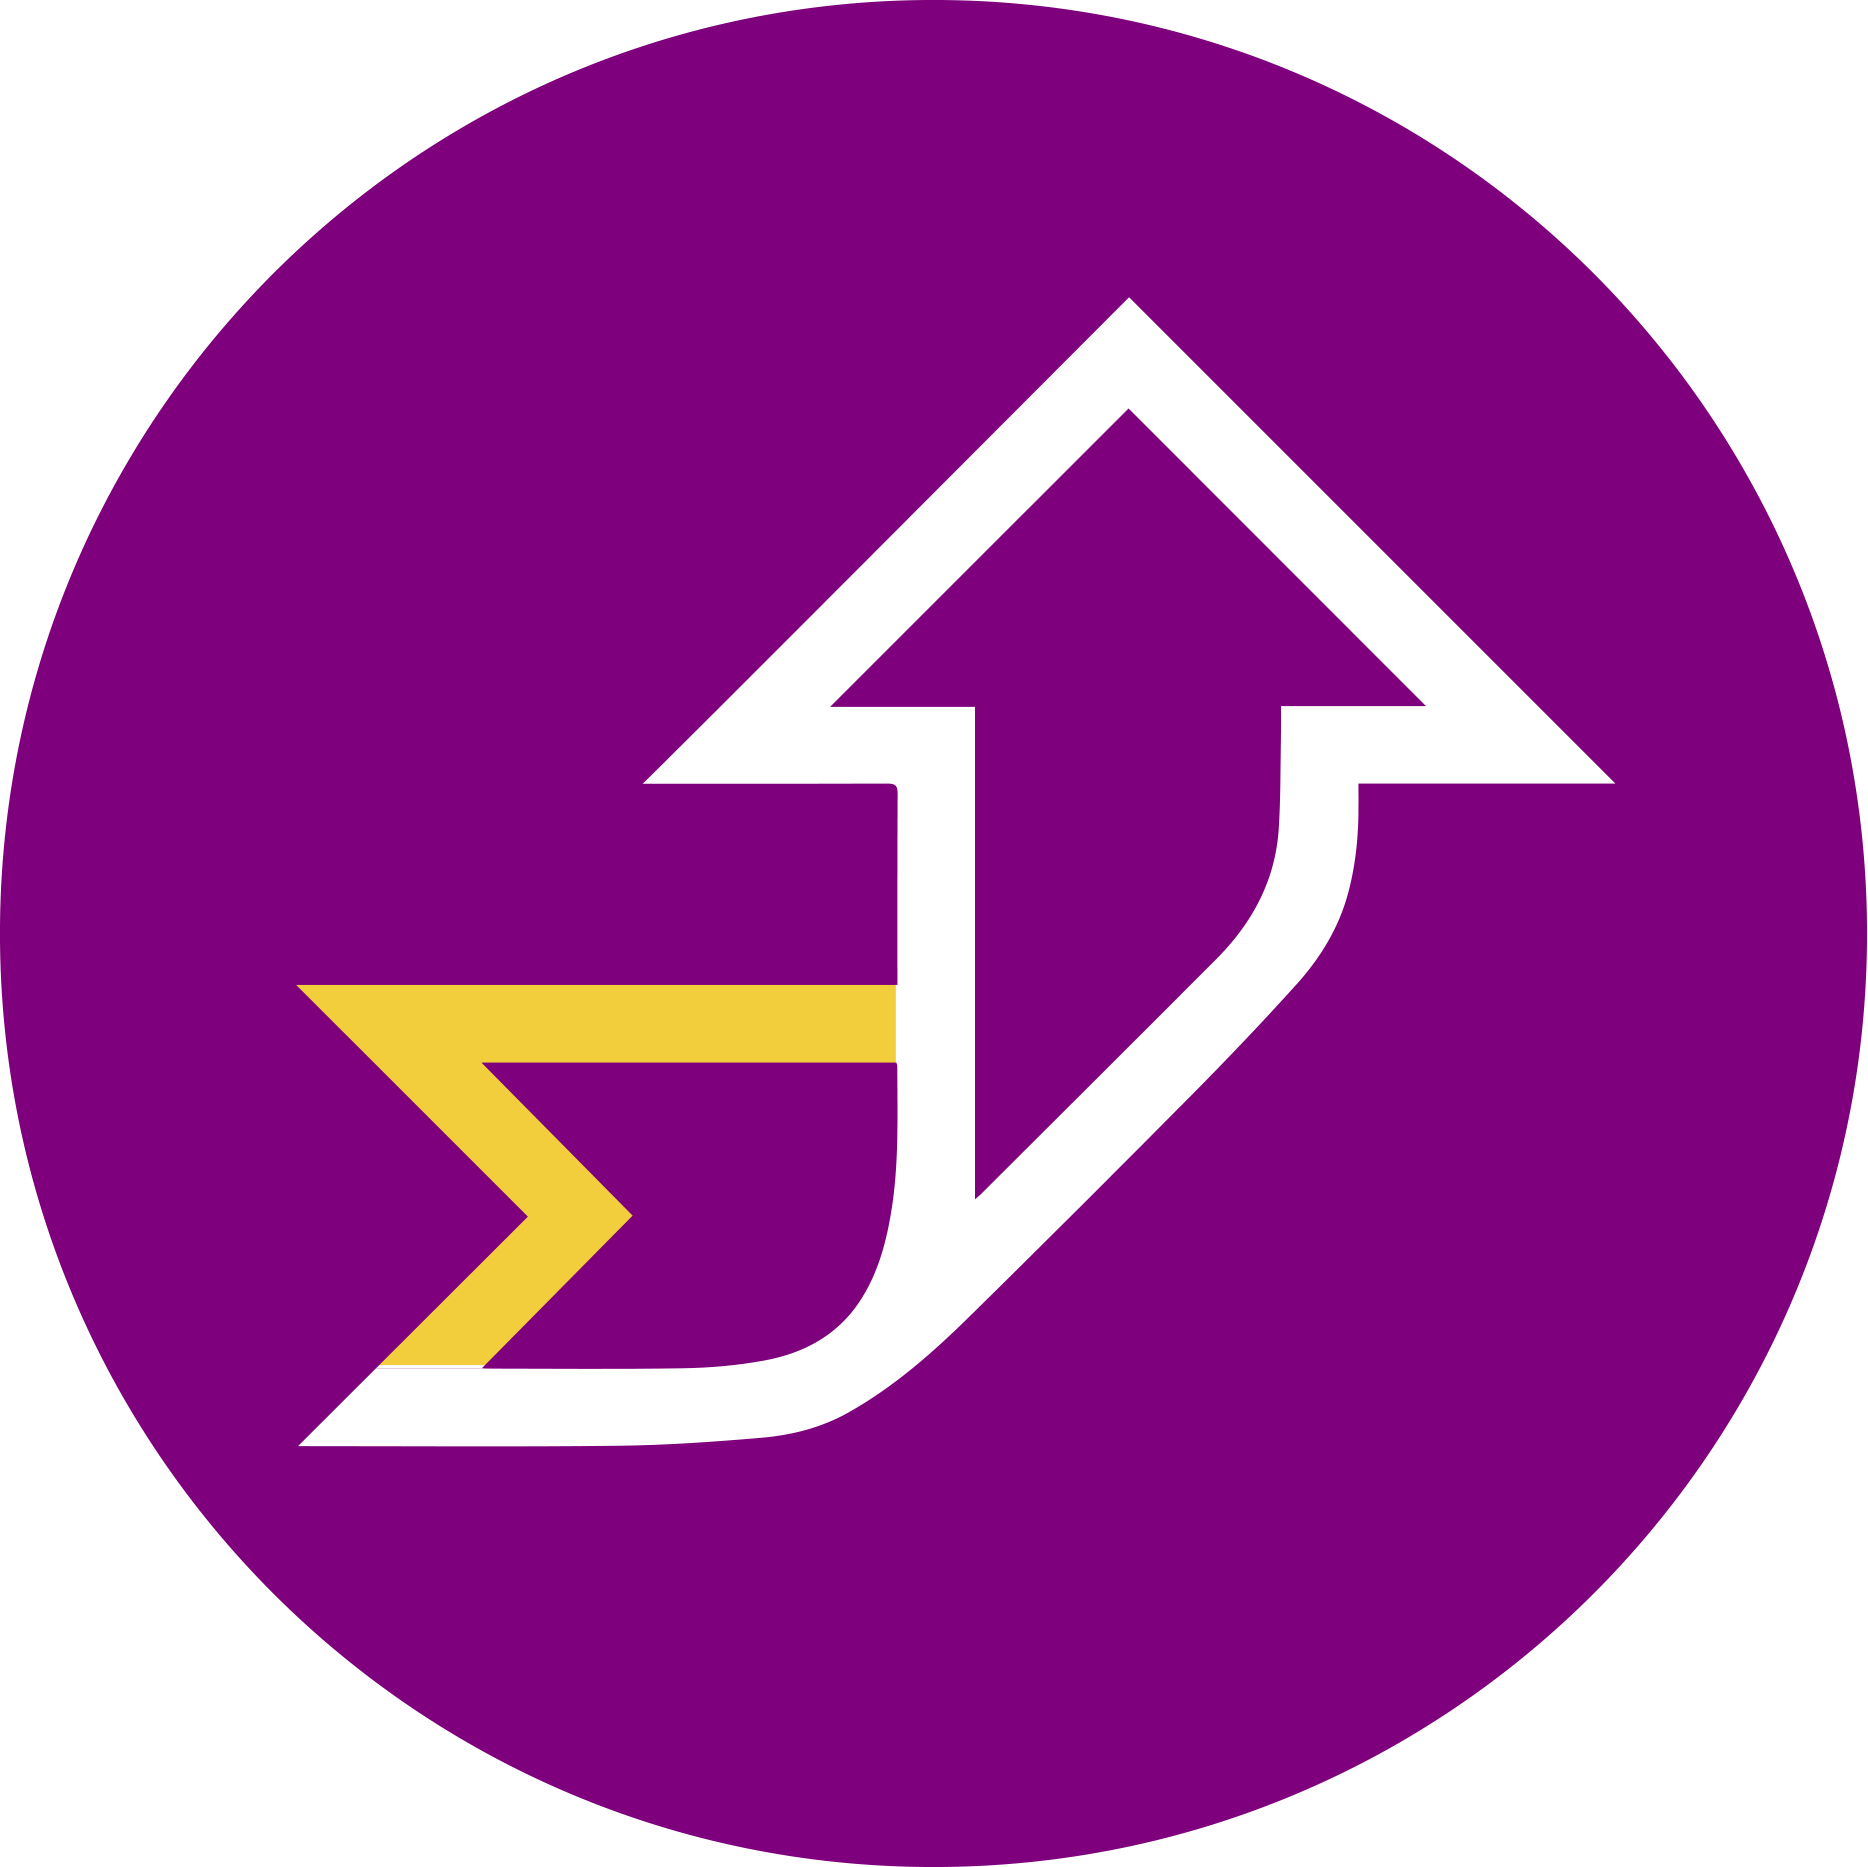 purple microsoft office logo